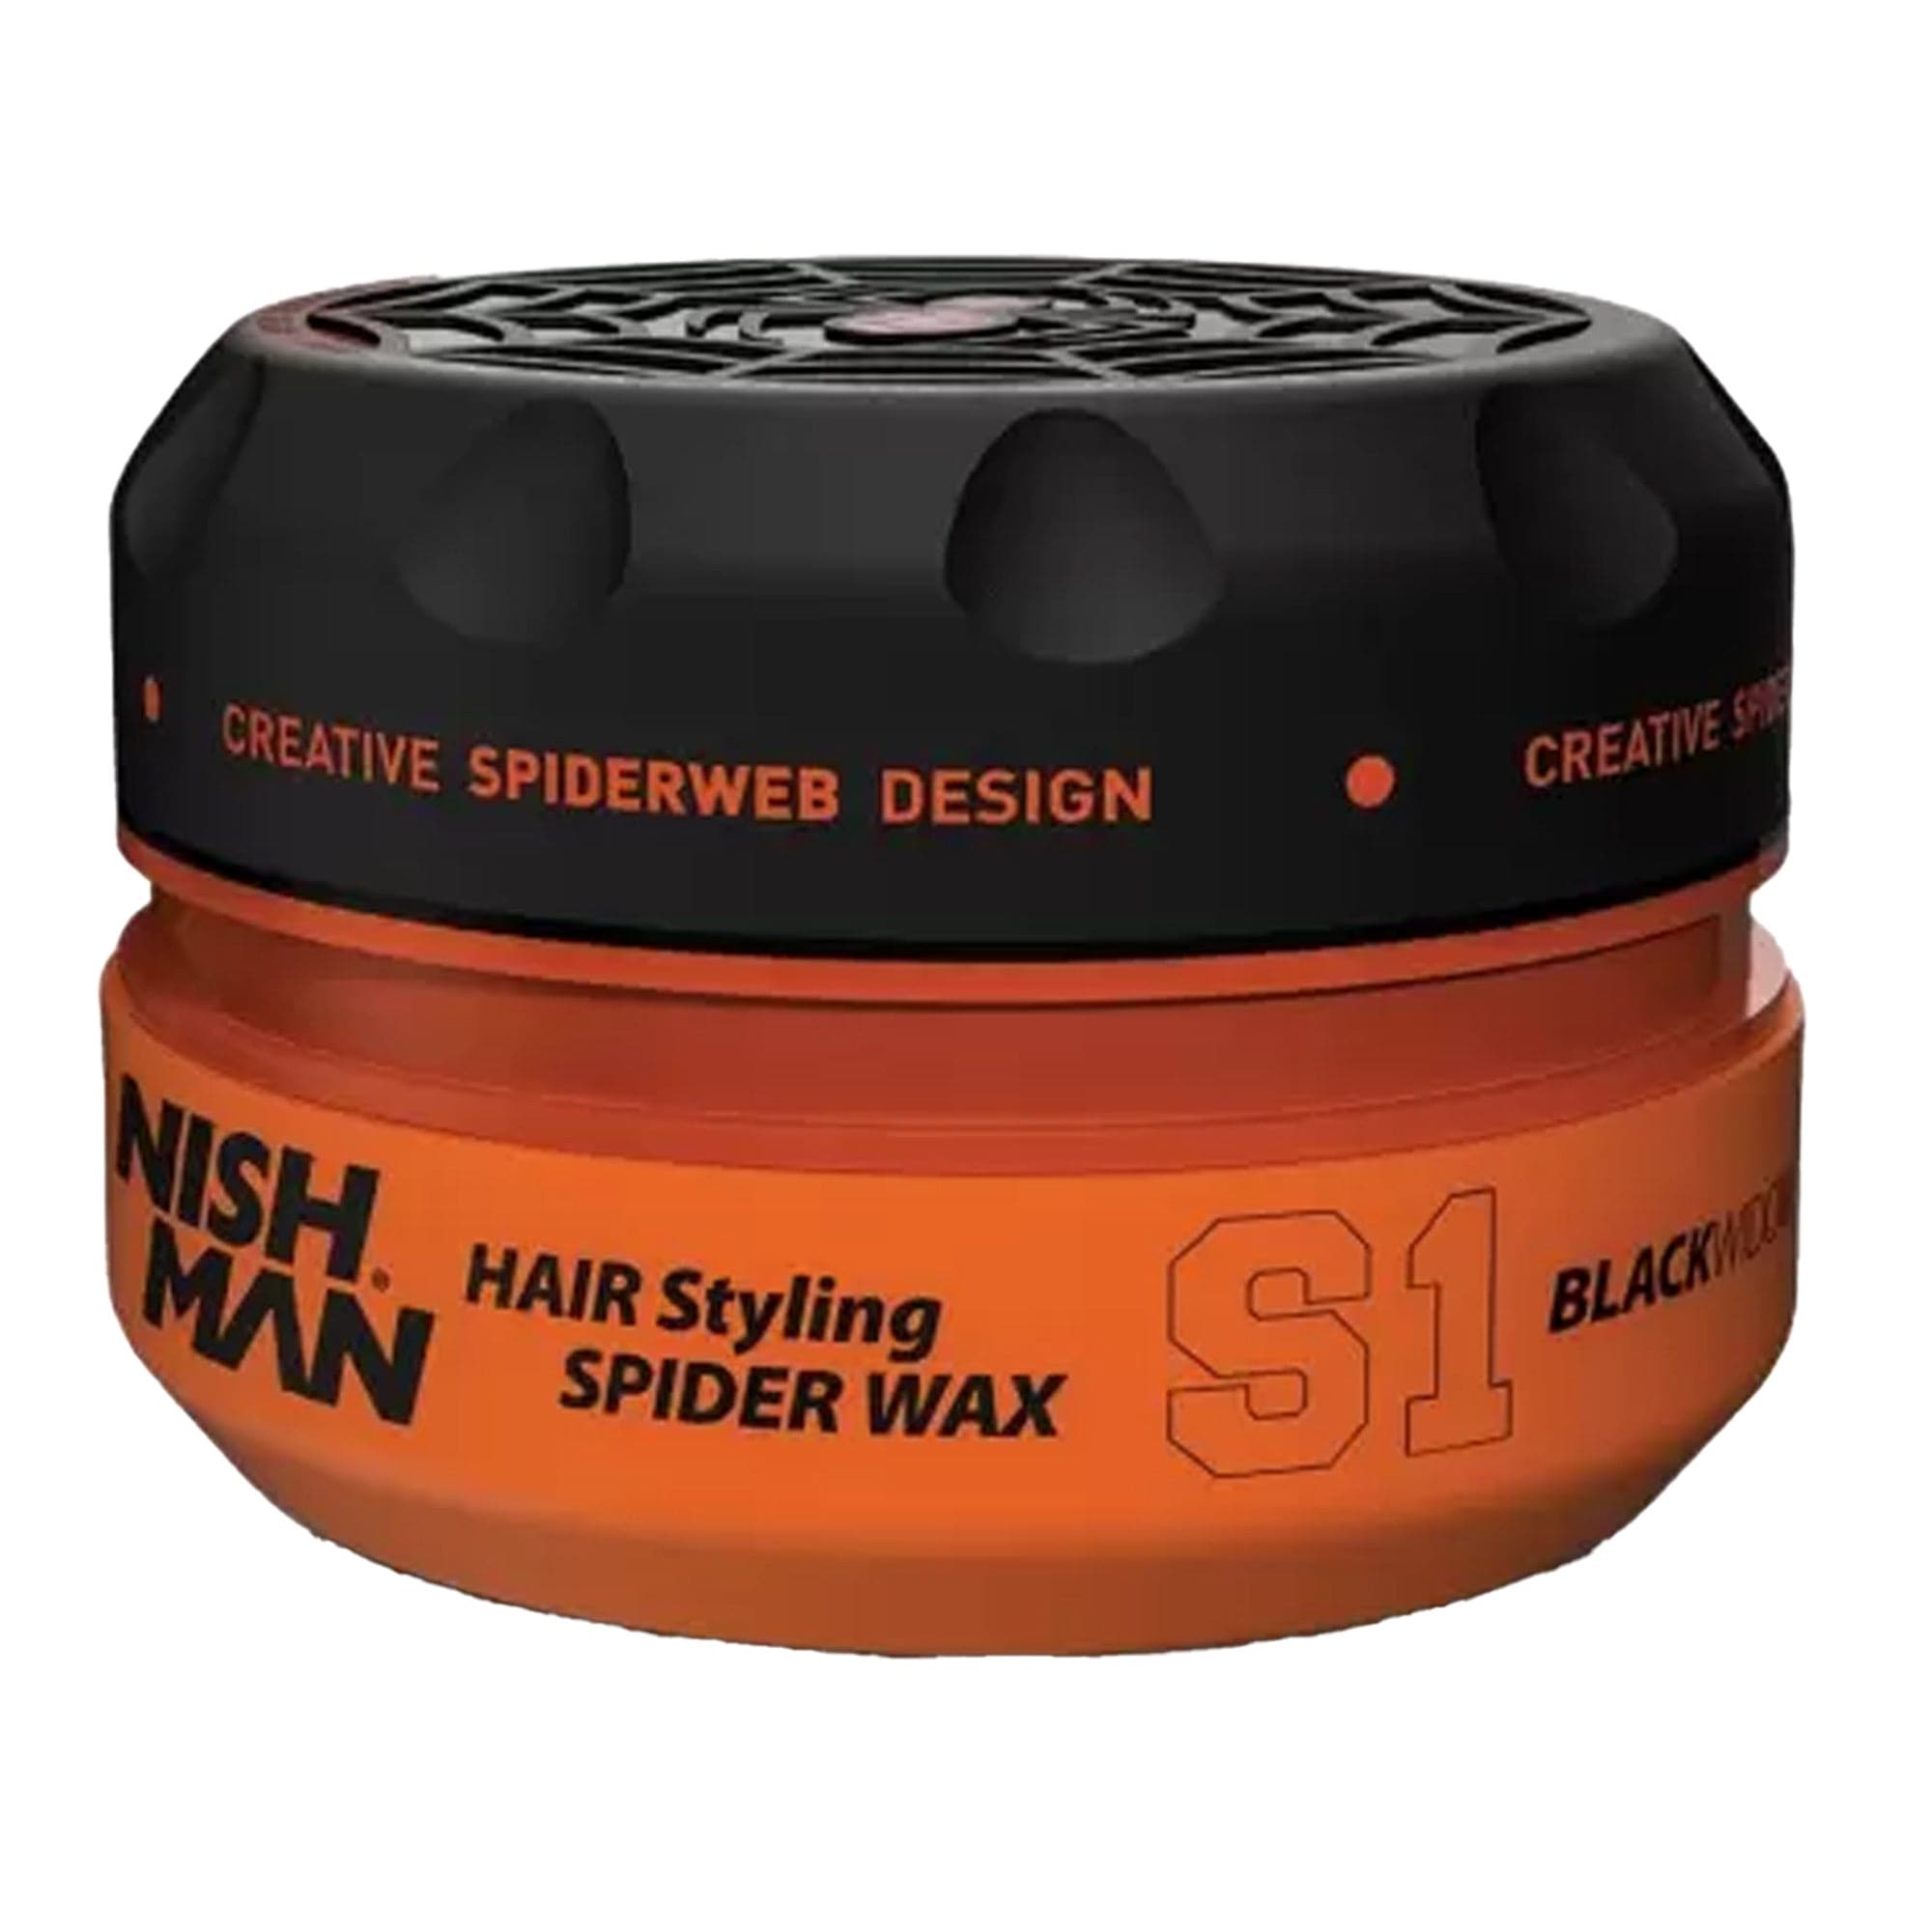 Nishman - Hair Styling Spider Wax S1 Blackwidow 150ml